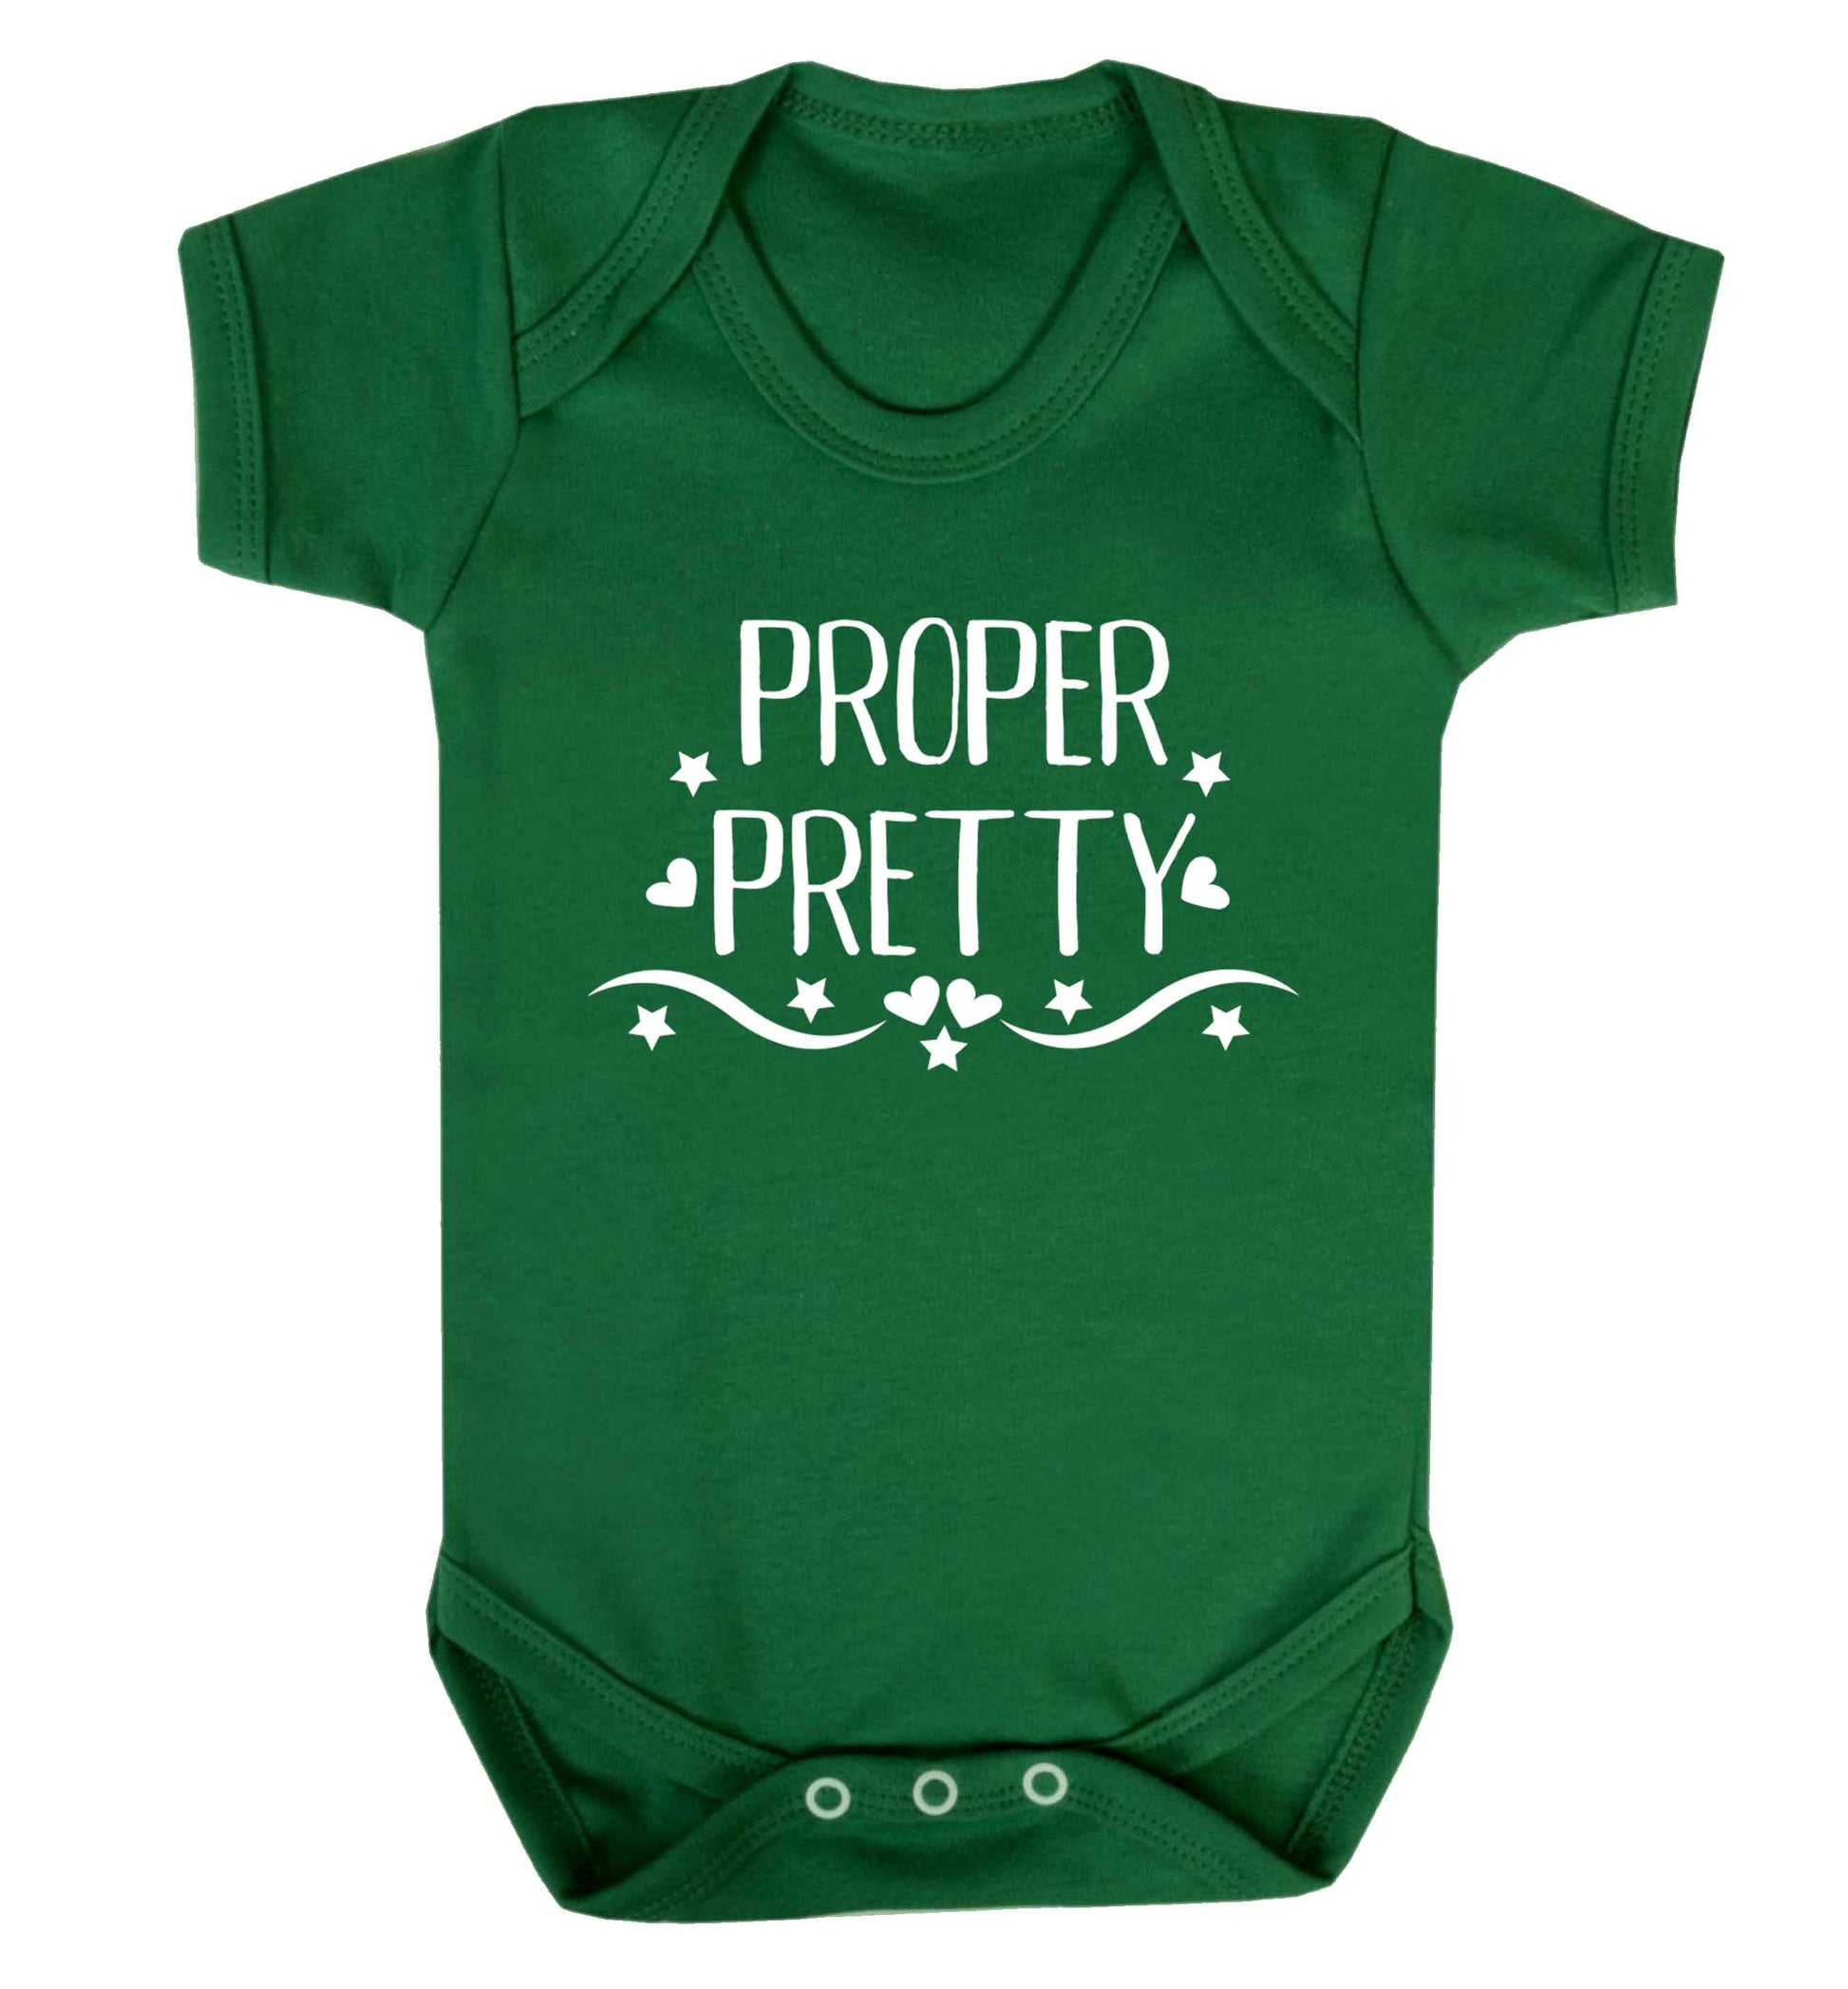 Proper pretty Baby Vest green 18-24 months